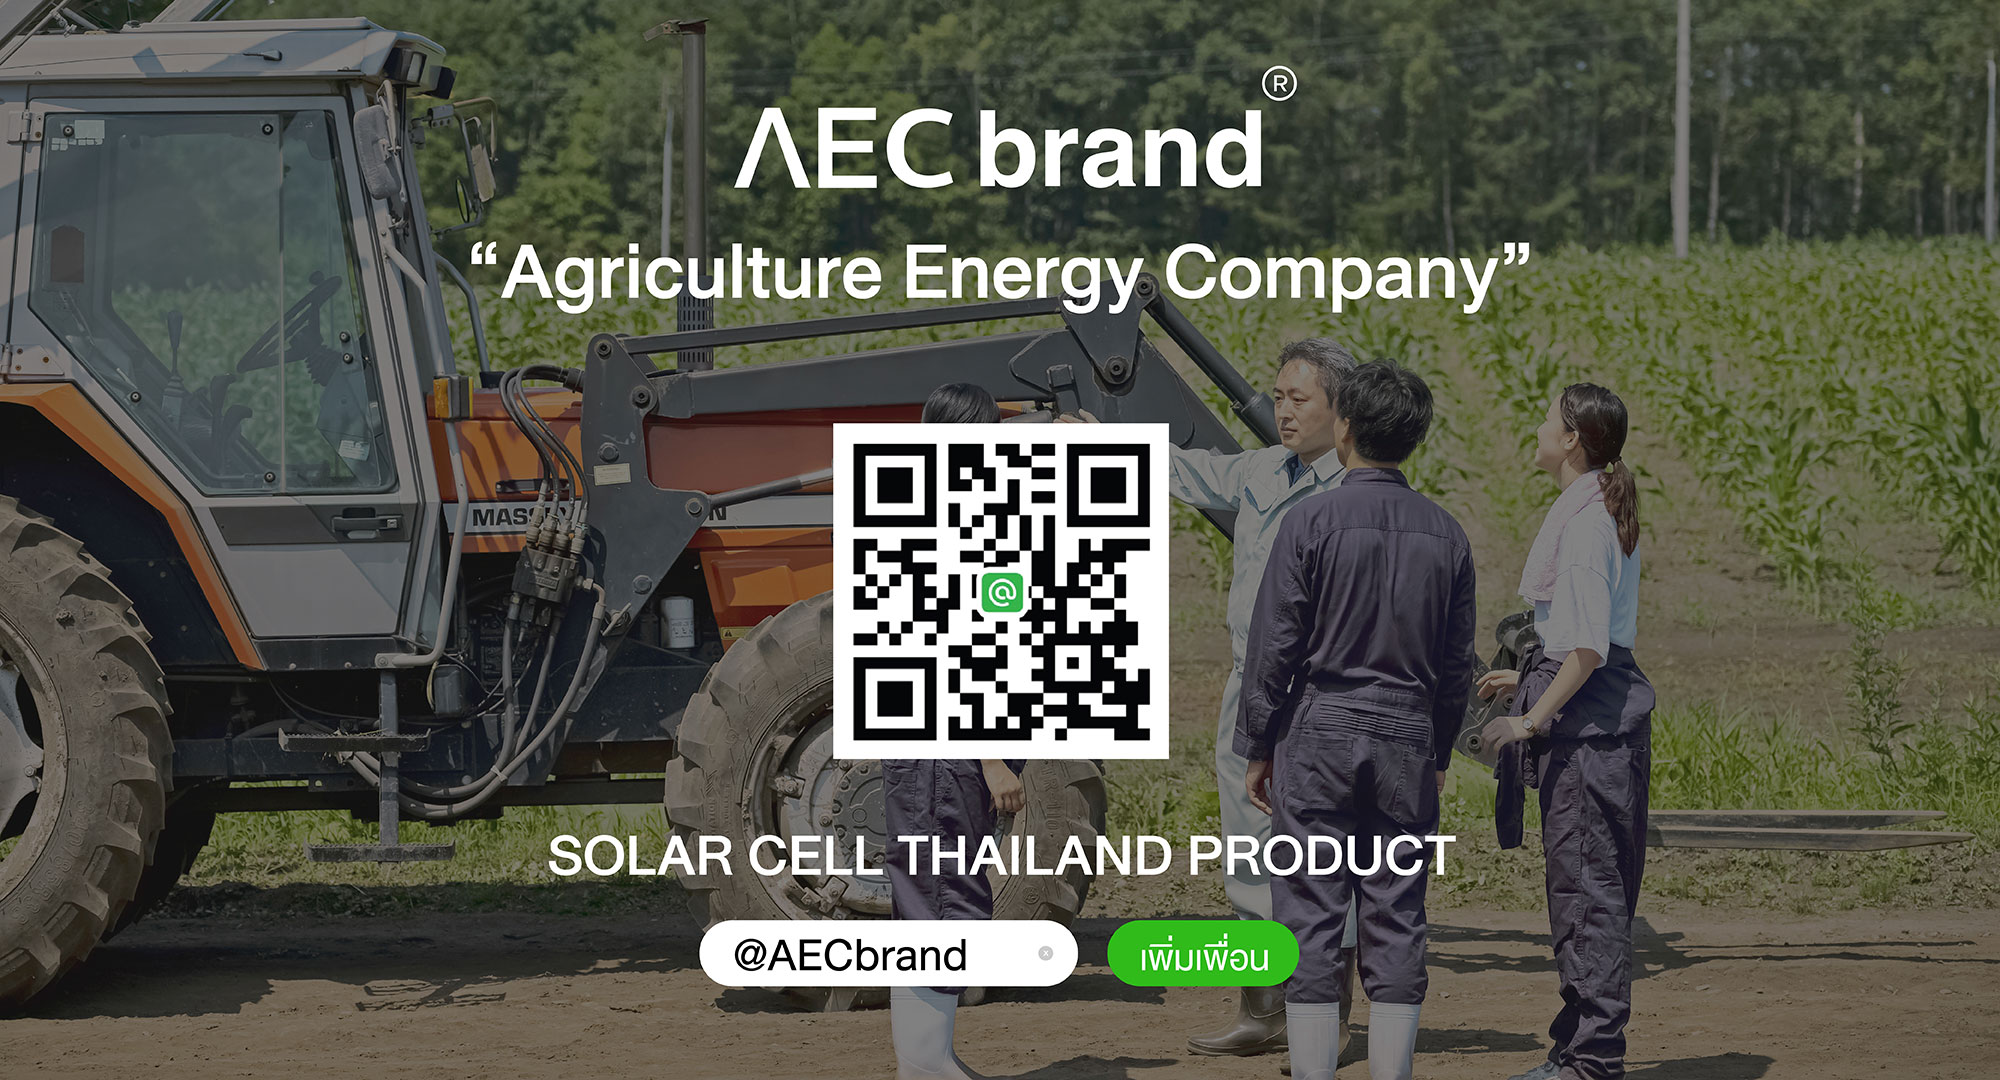 Contact-us-AECbrand